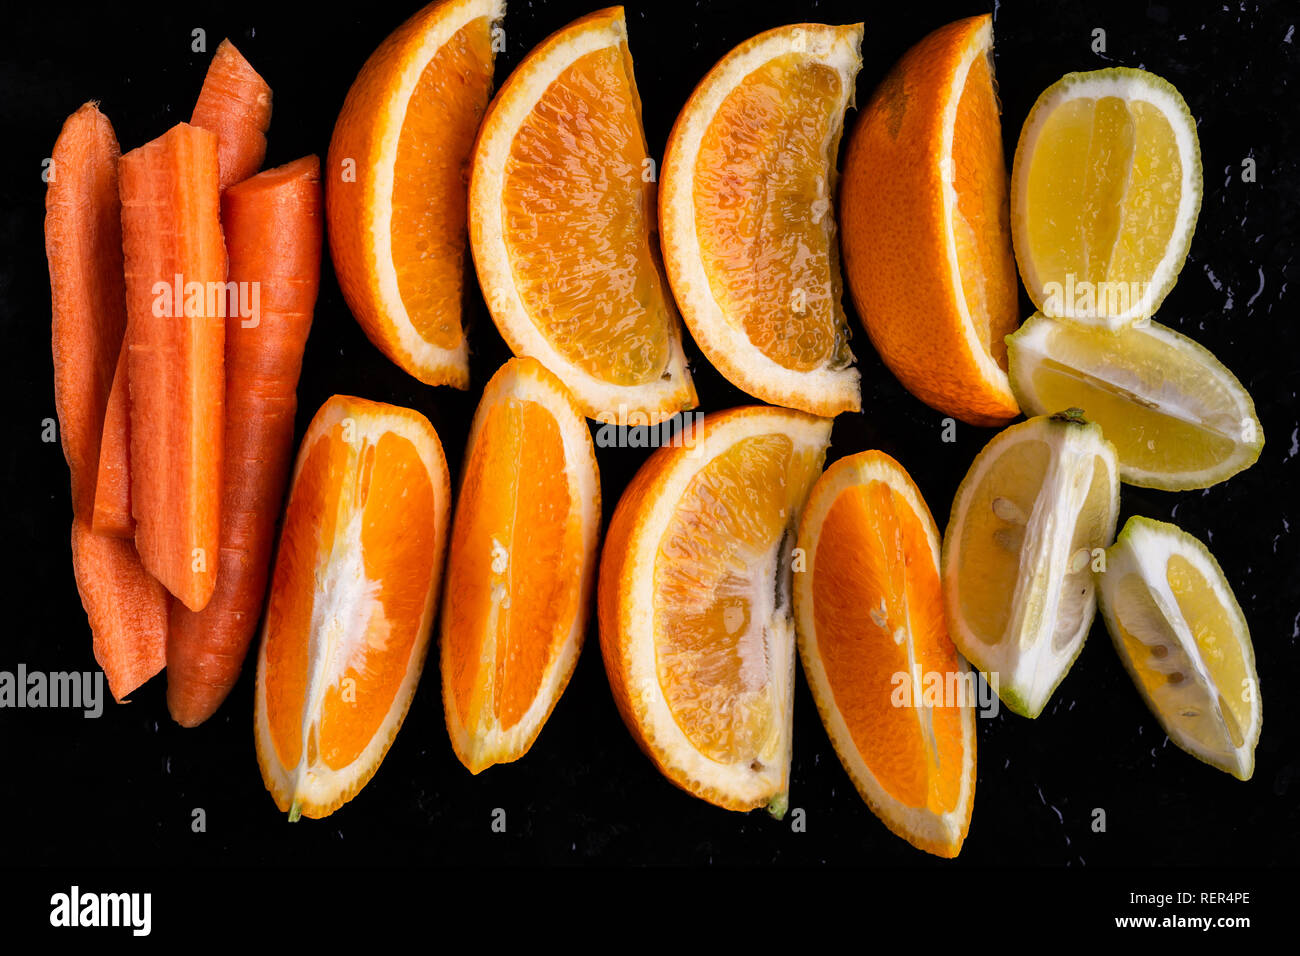 Directly above shot of slices of orange, lemon, carrots on black background Stock Photo